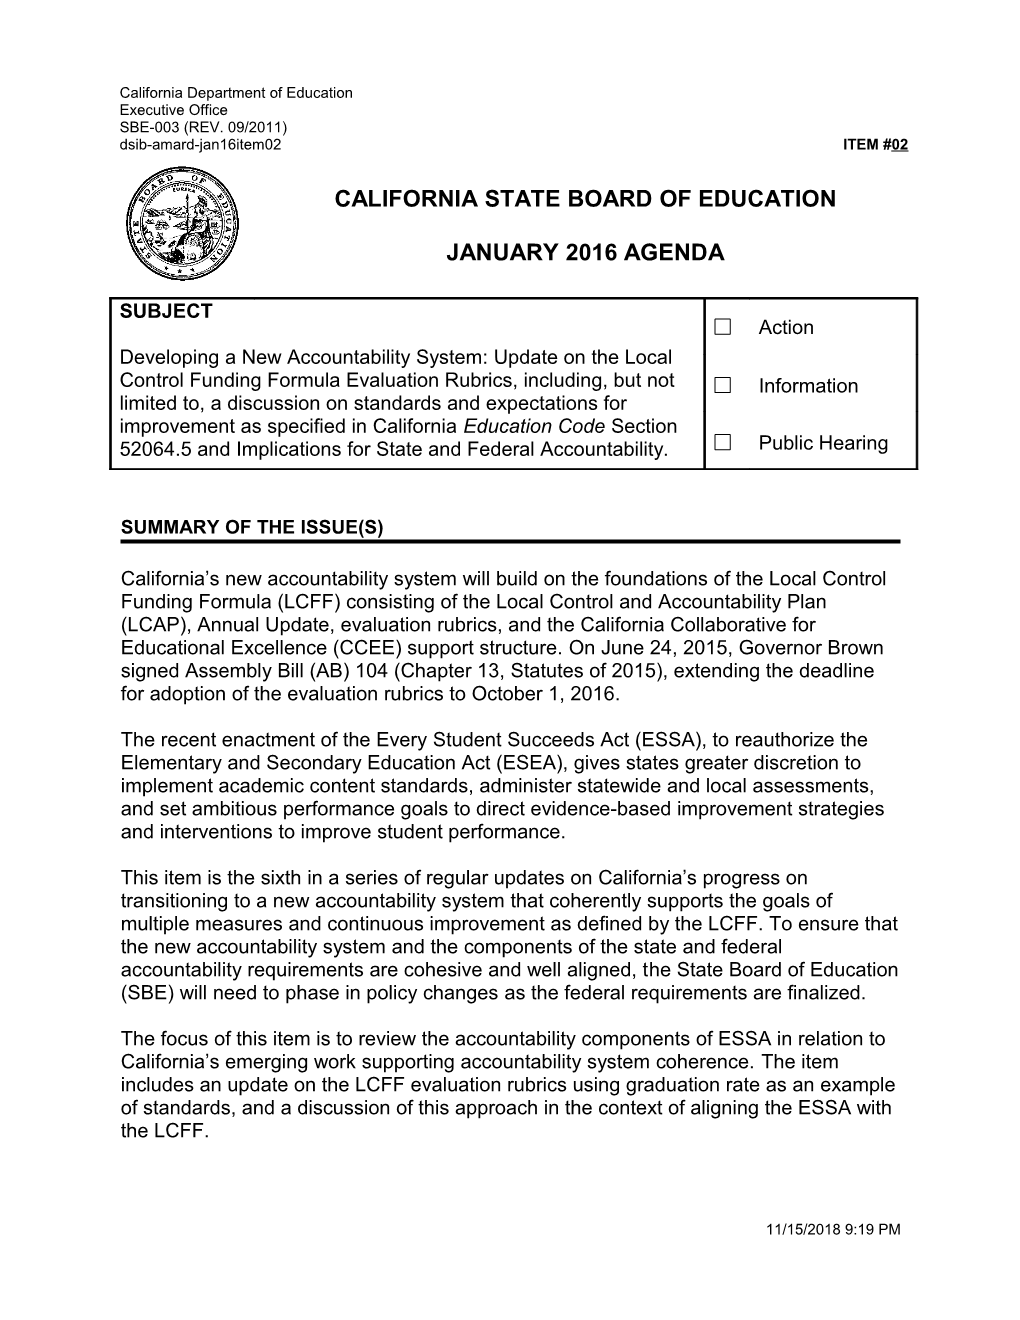 January 2016 Agenda Item 02 - Meeting Agendas (CA State Board of Education)